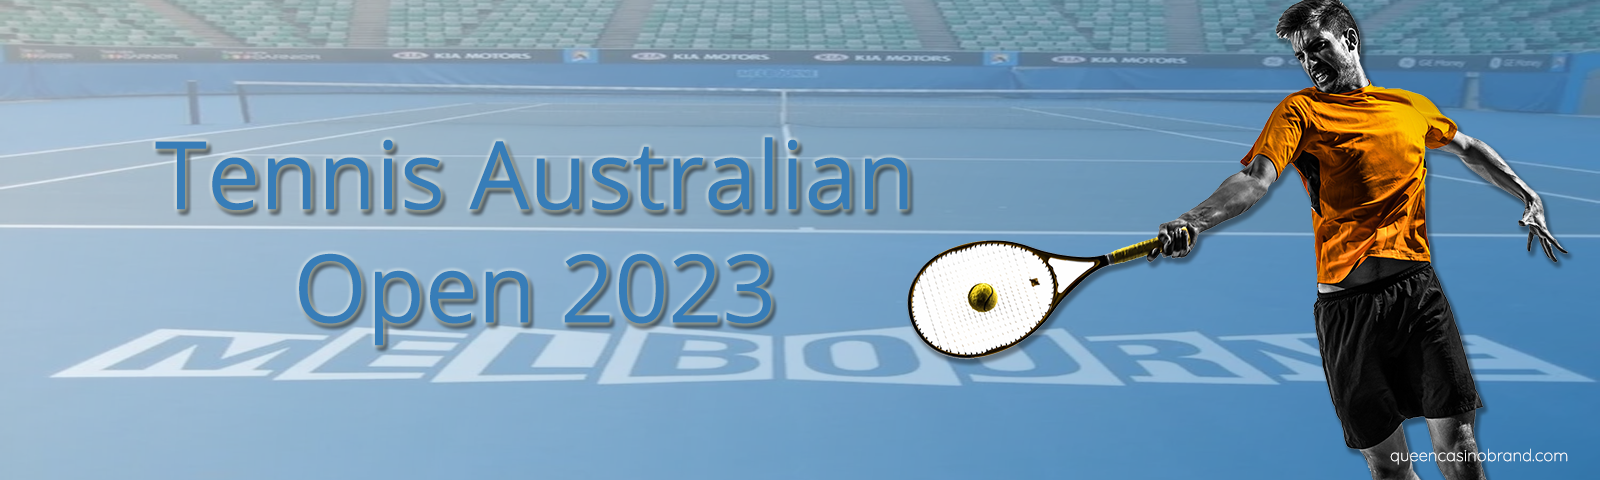 Tennis Australian Open 2023